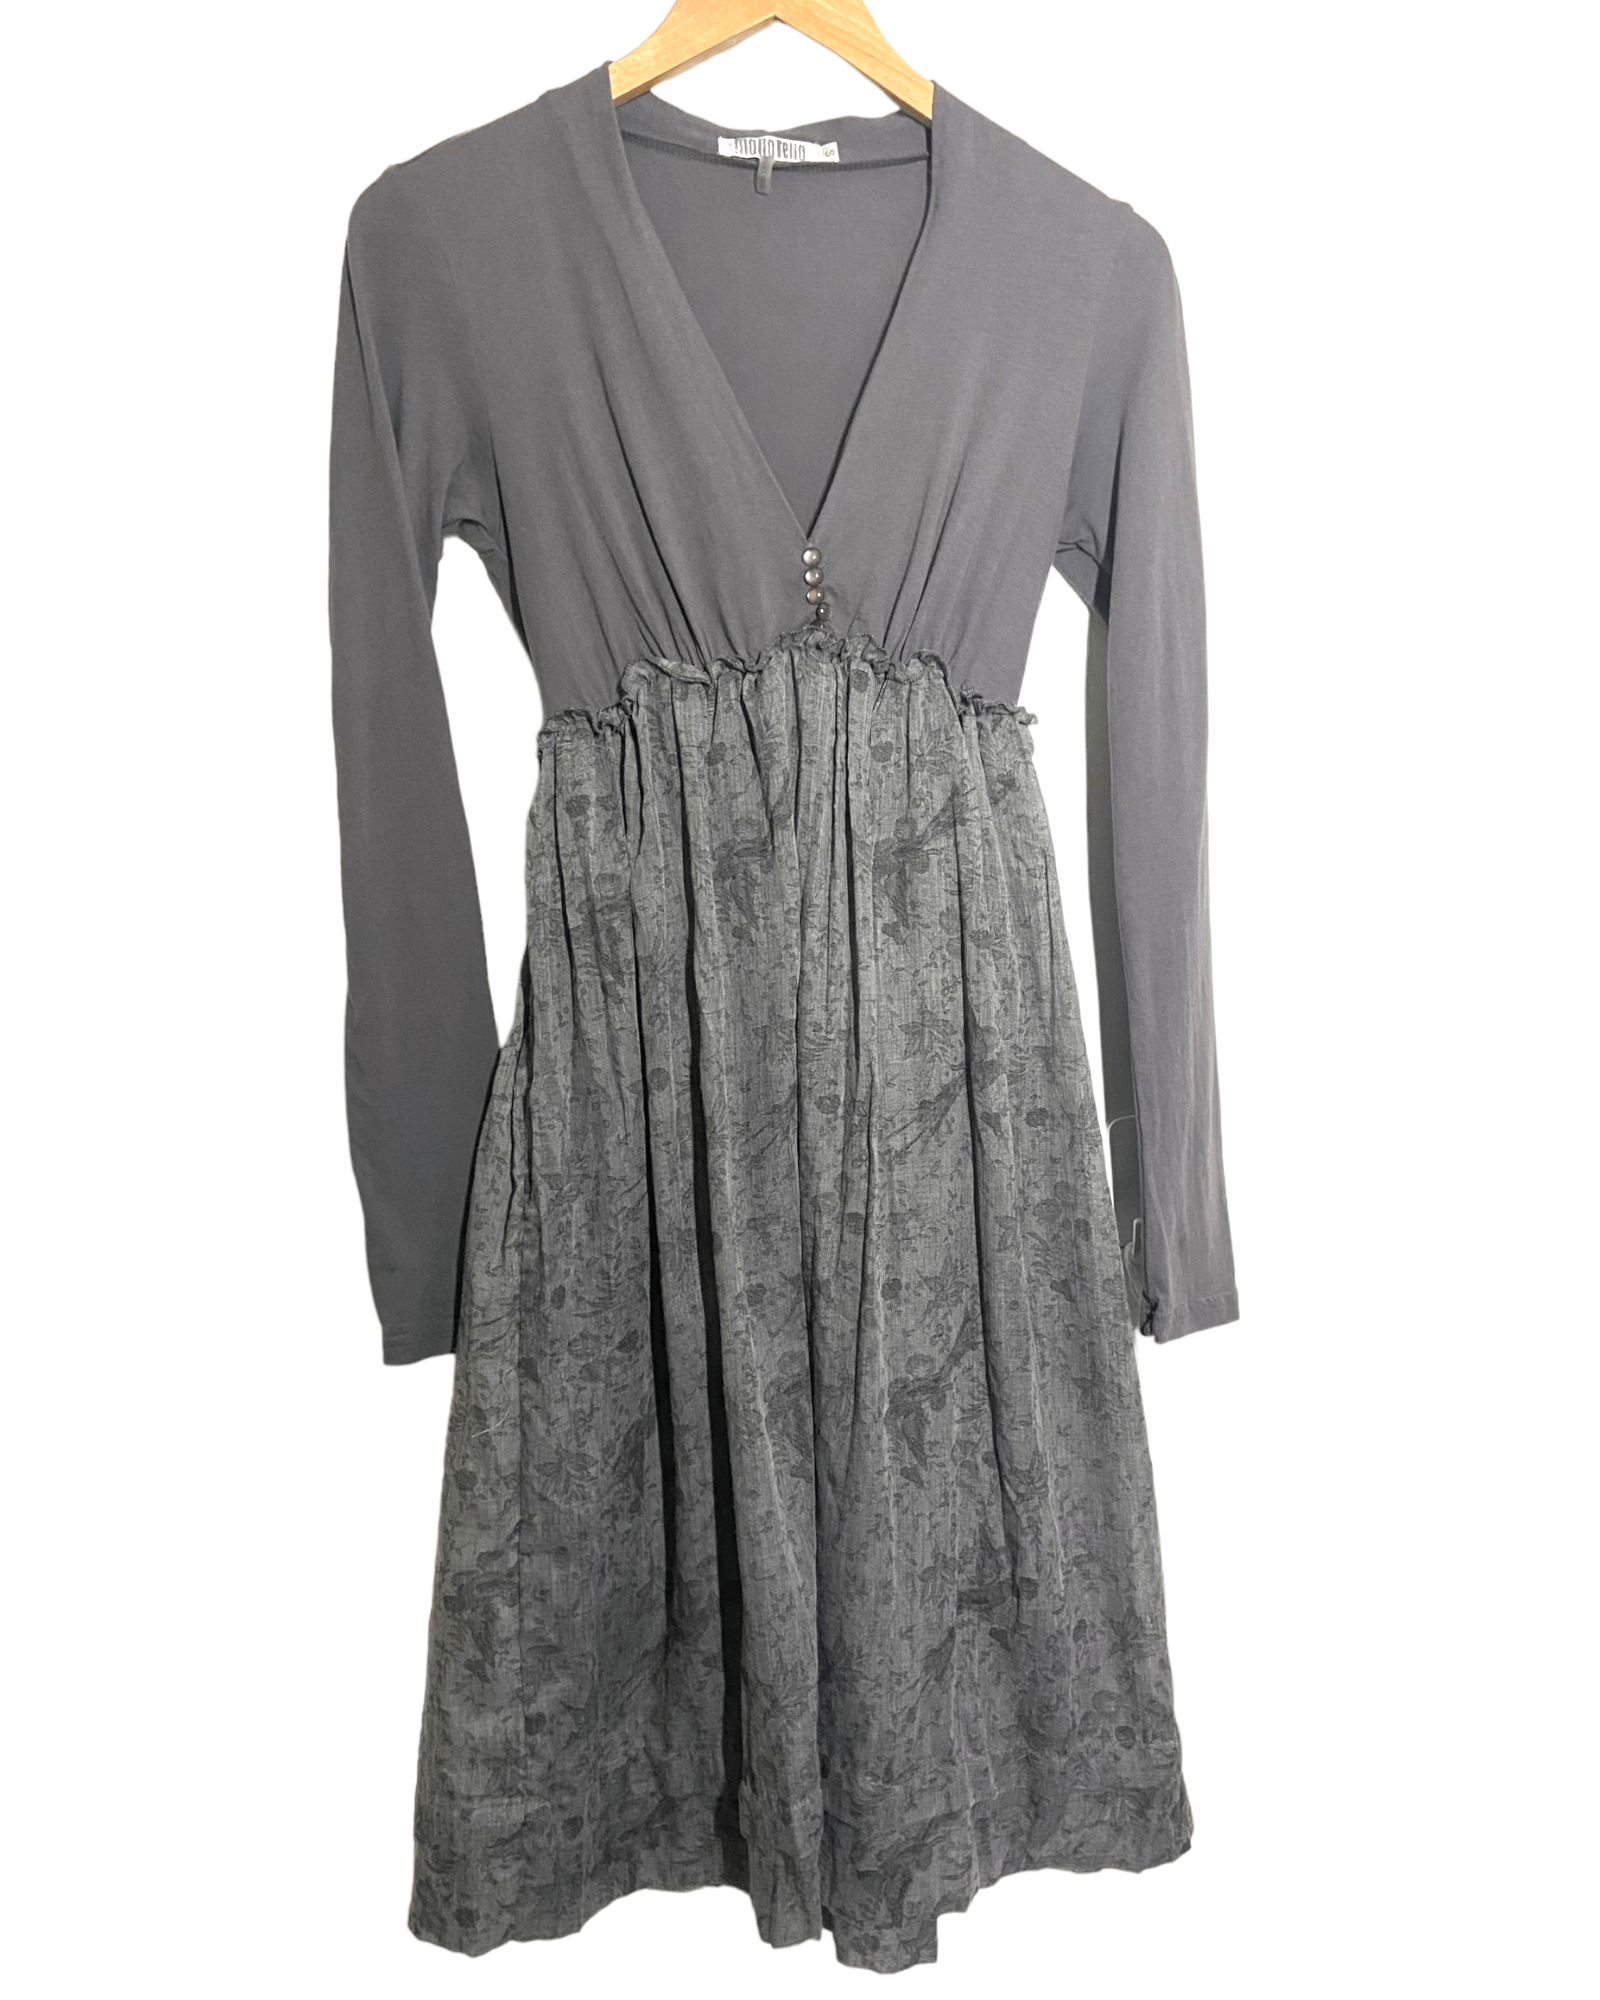 Soft Summer MONORENO gray boho ruffle dress